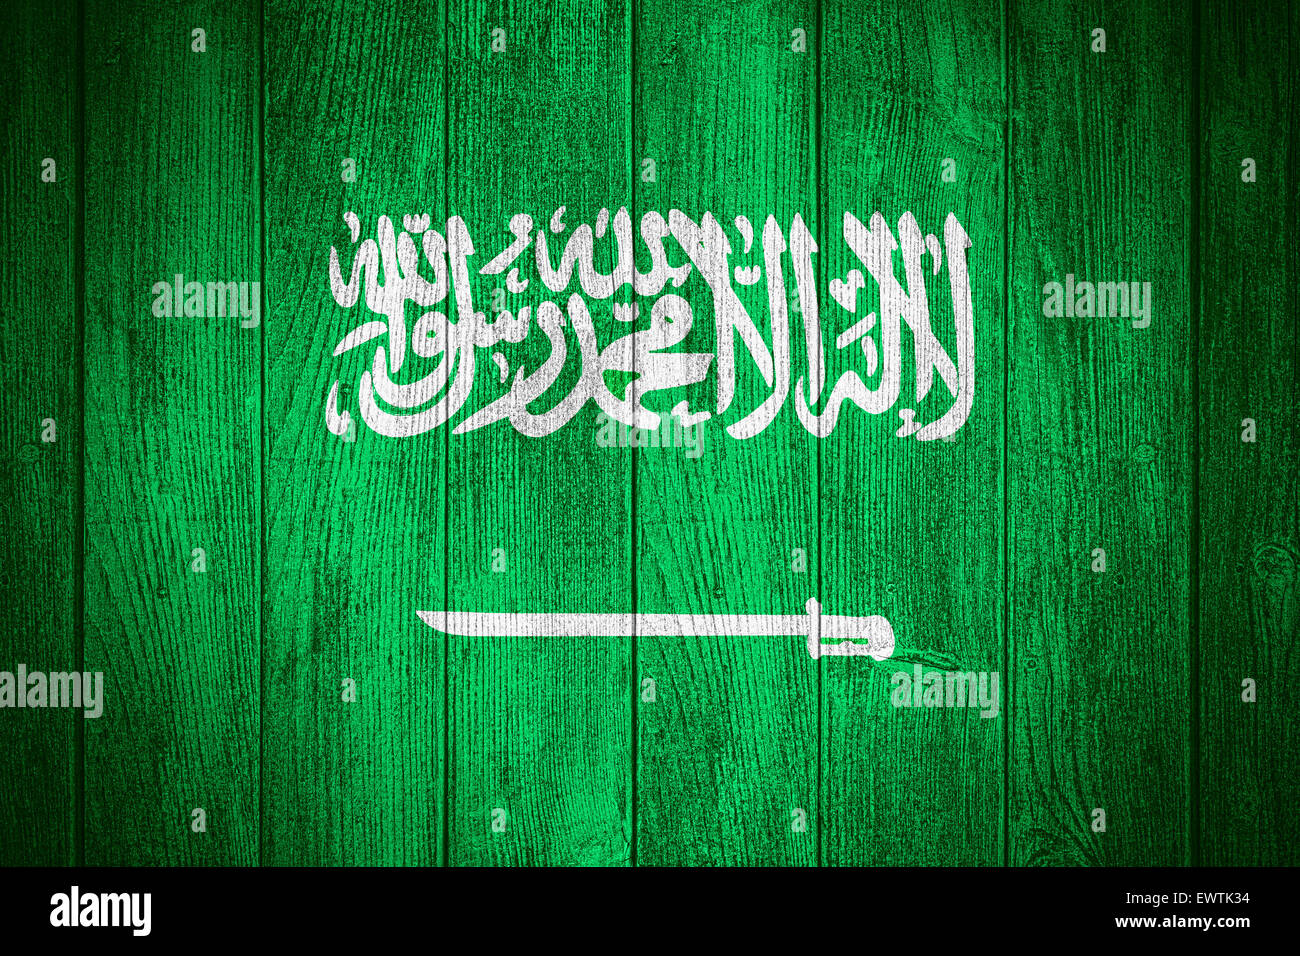 Saudi Arabia flag or Saudi Arabian banner on wooden boards background Stock Photo